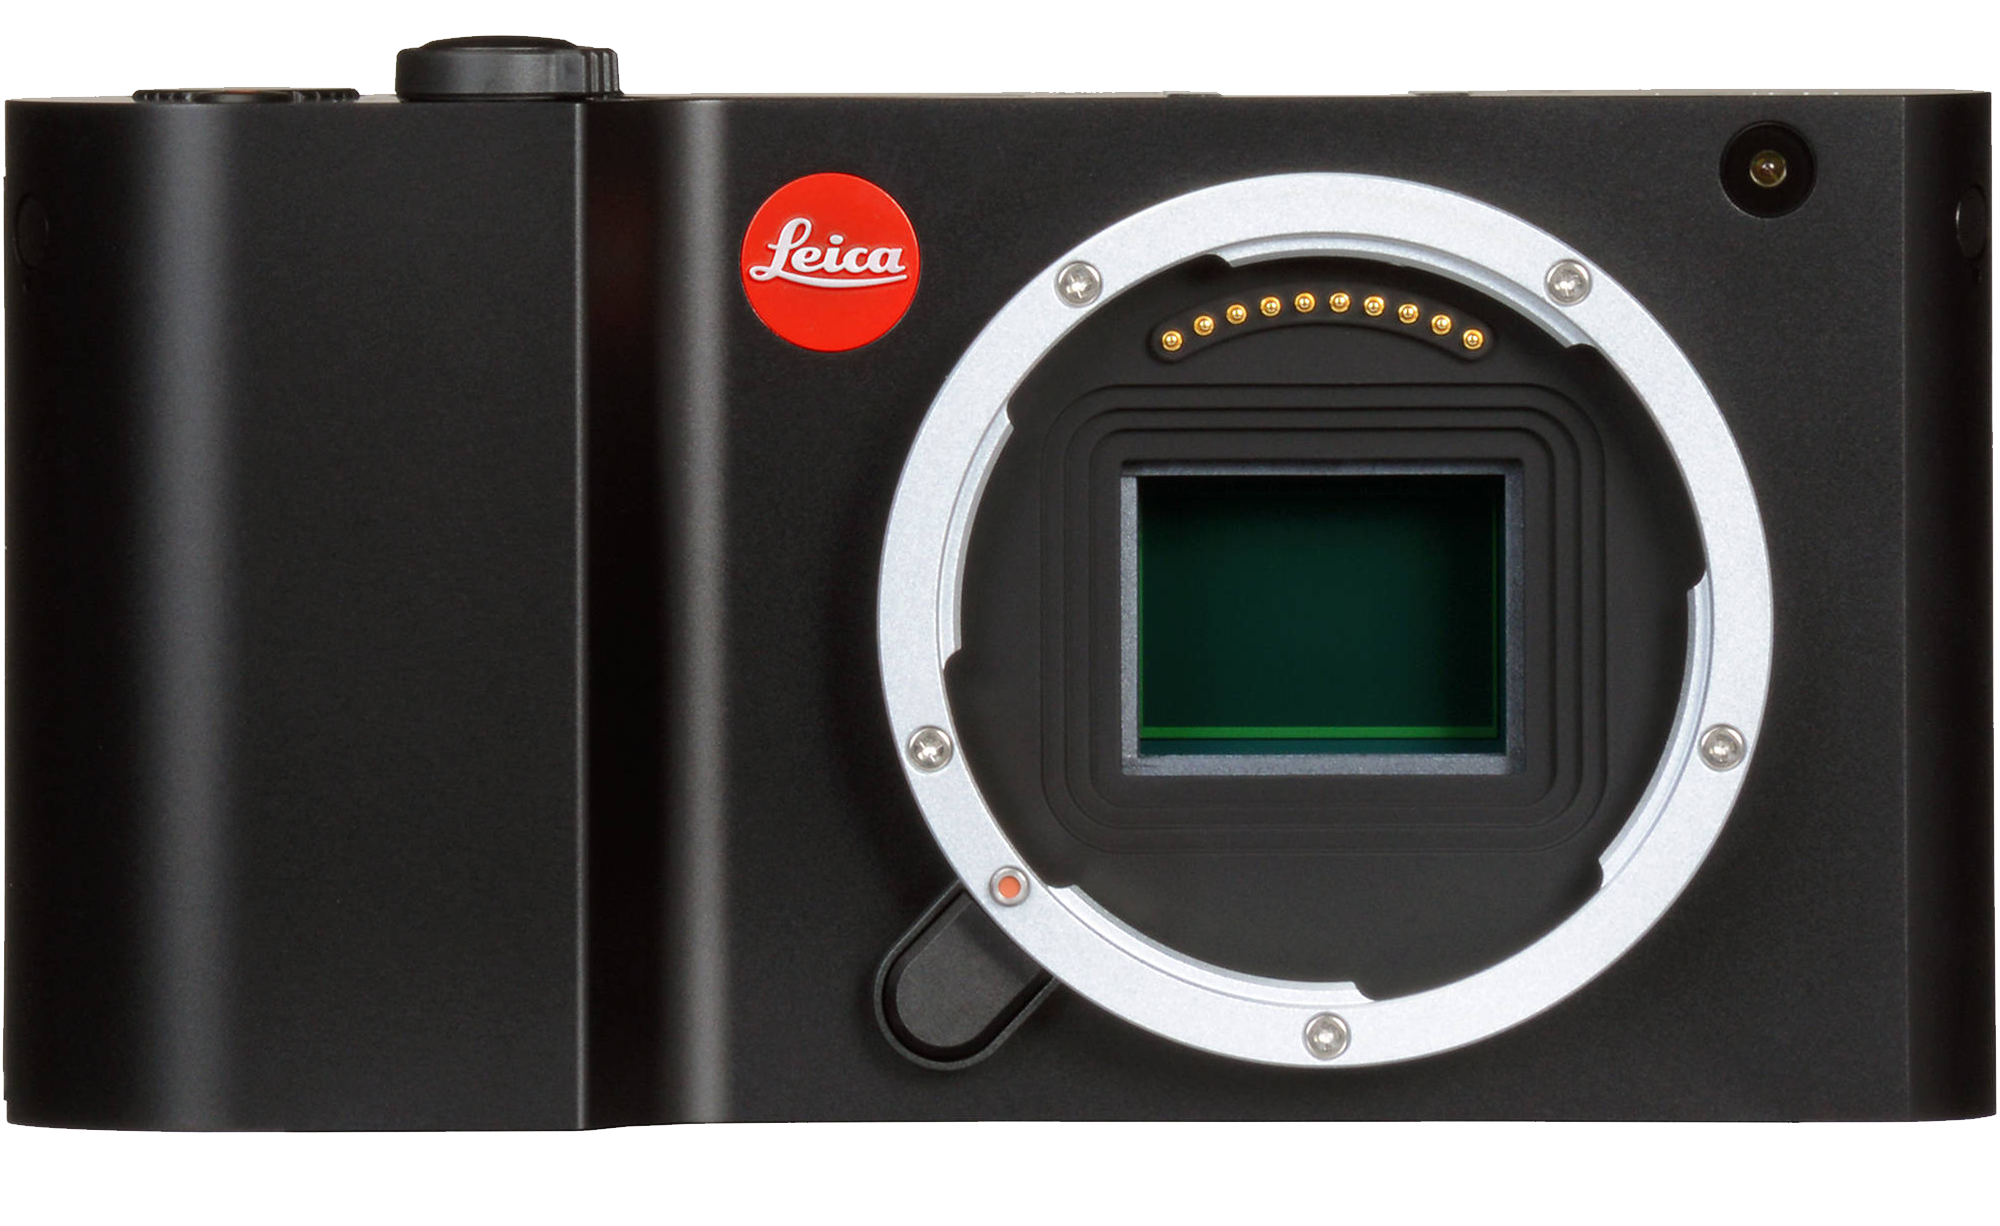 Leica TL2 camera vs Leica TL Camera review by Master Photographer Oz Yilmaz. Leica Review explains Leica TL2 camera specs and photos for photography tips